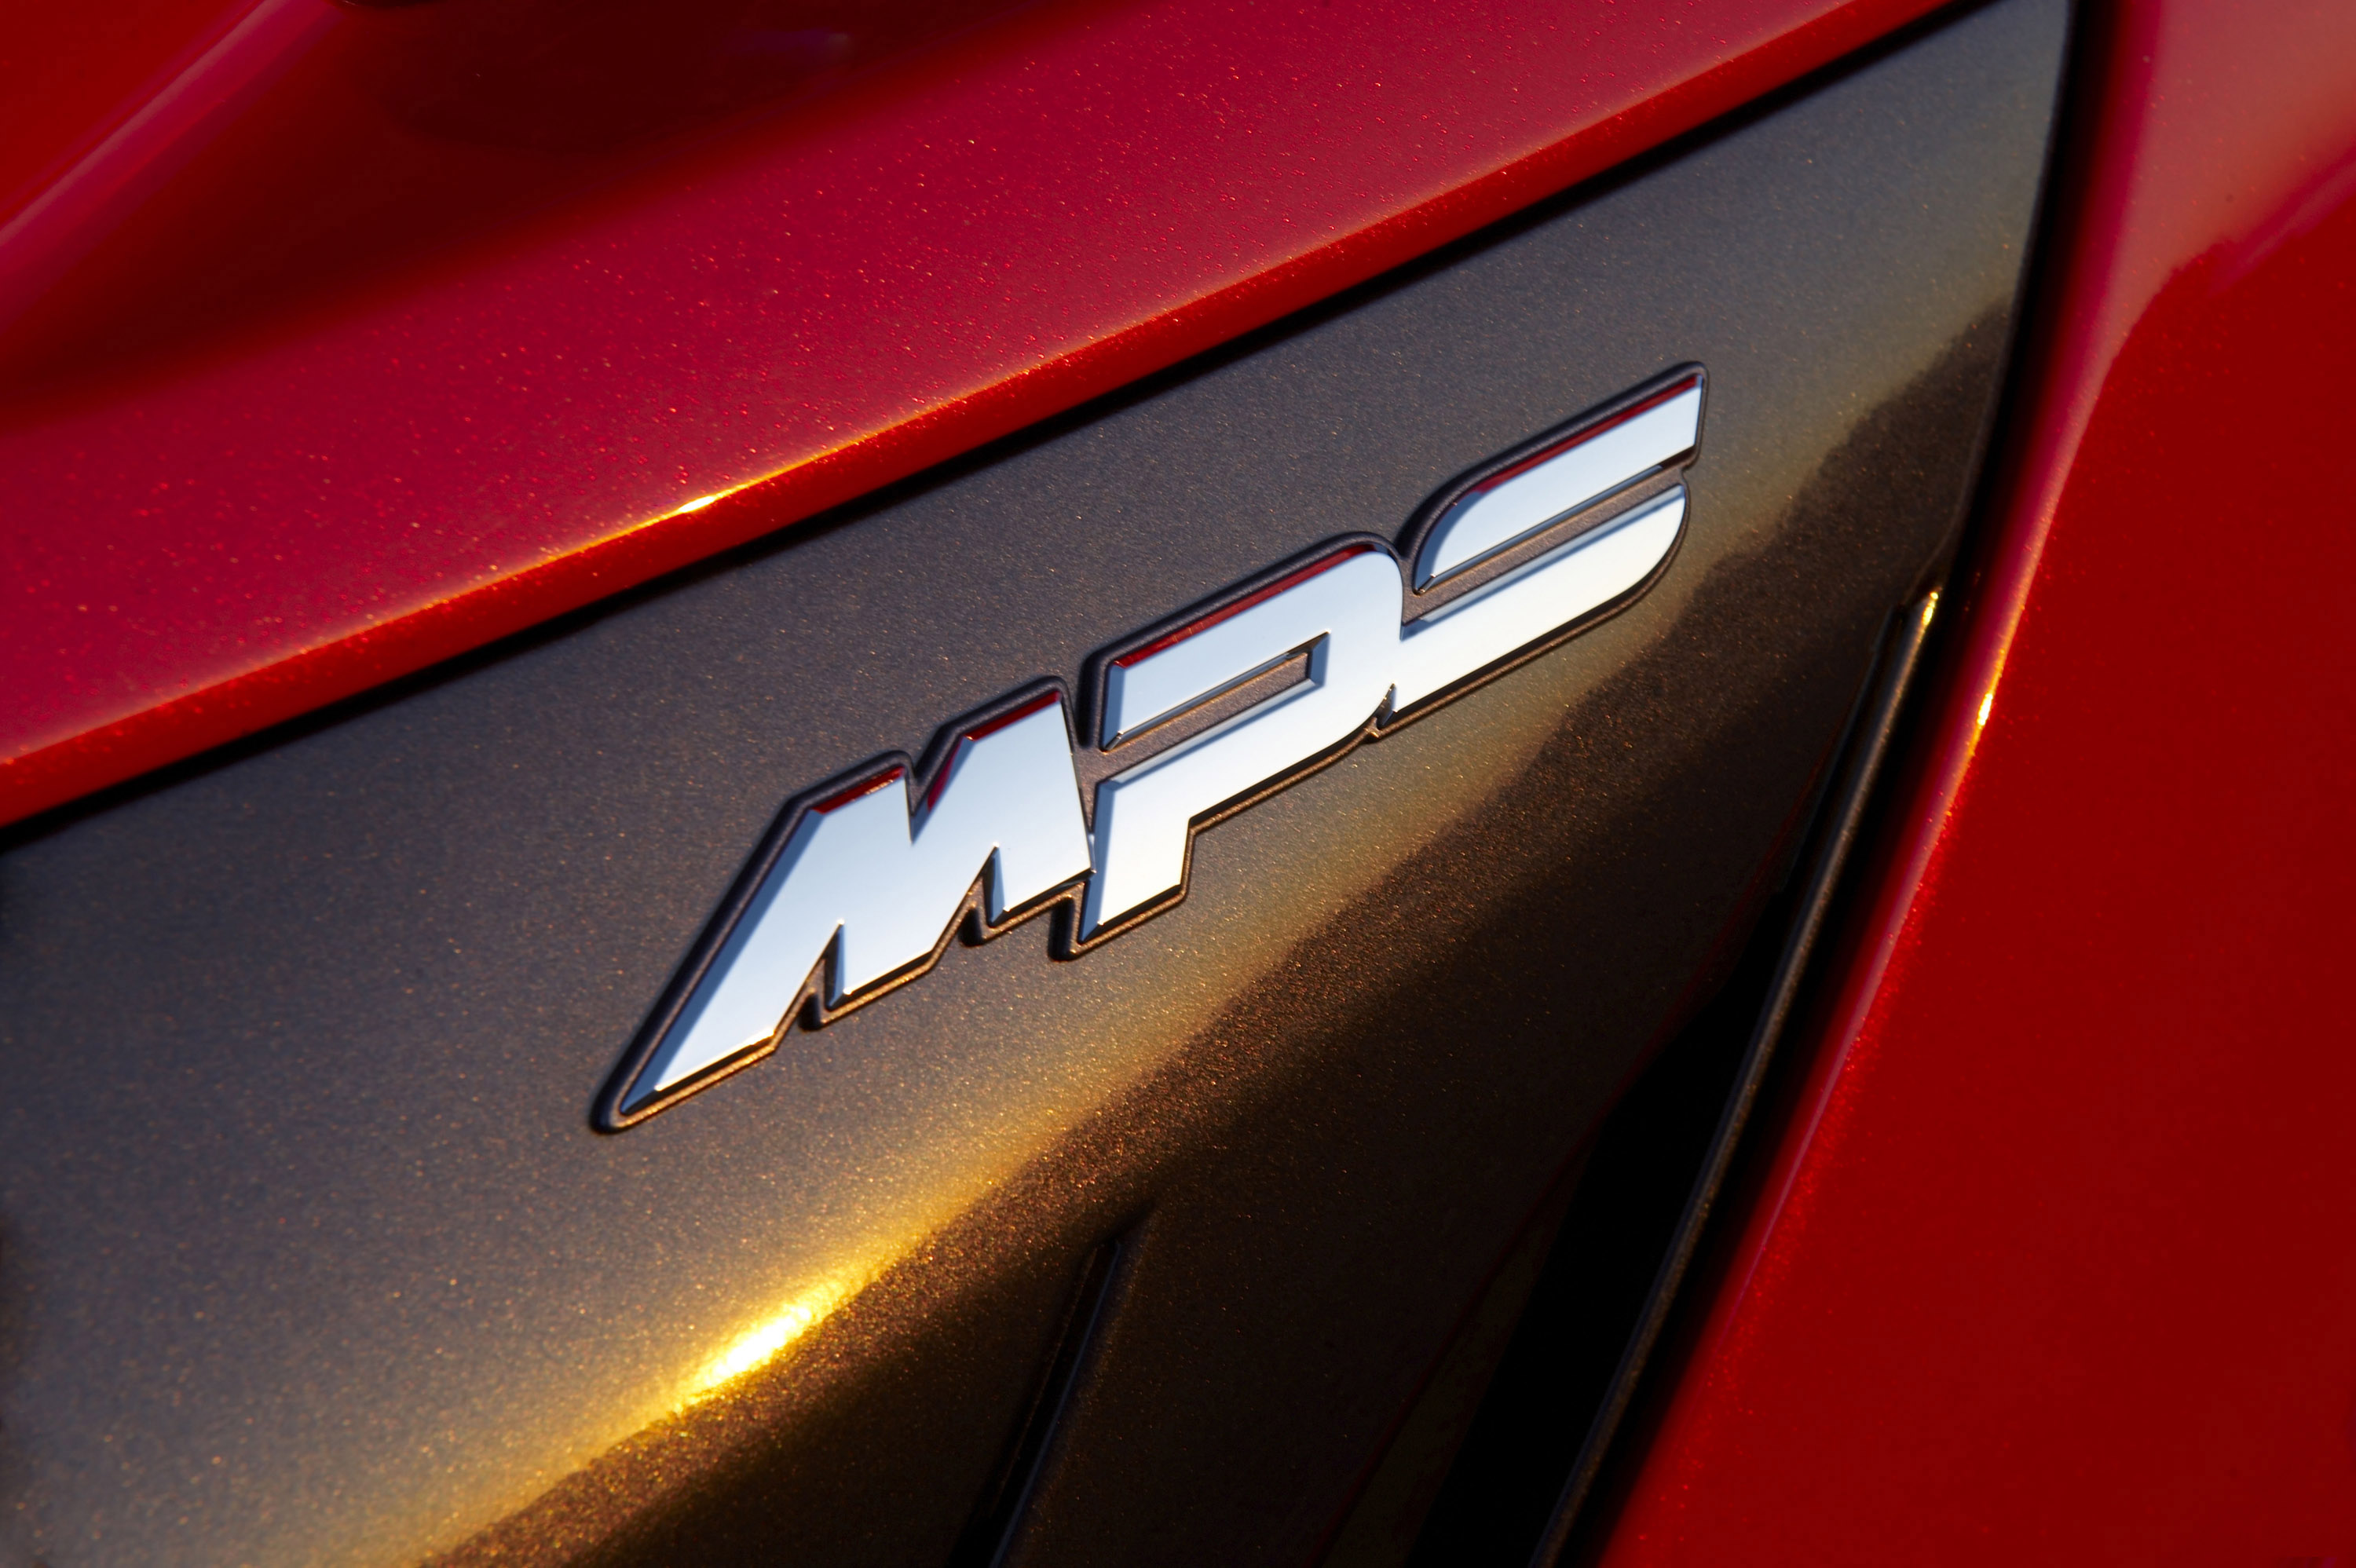 Mazda3 MPS